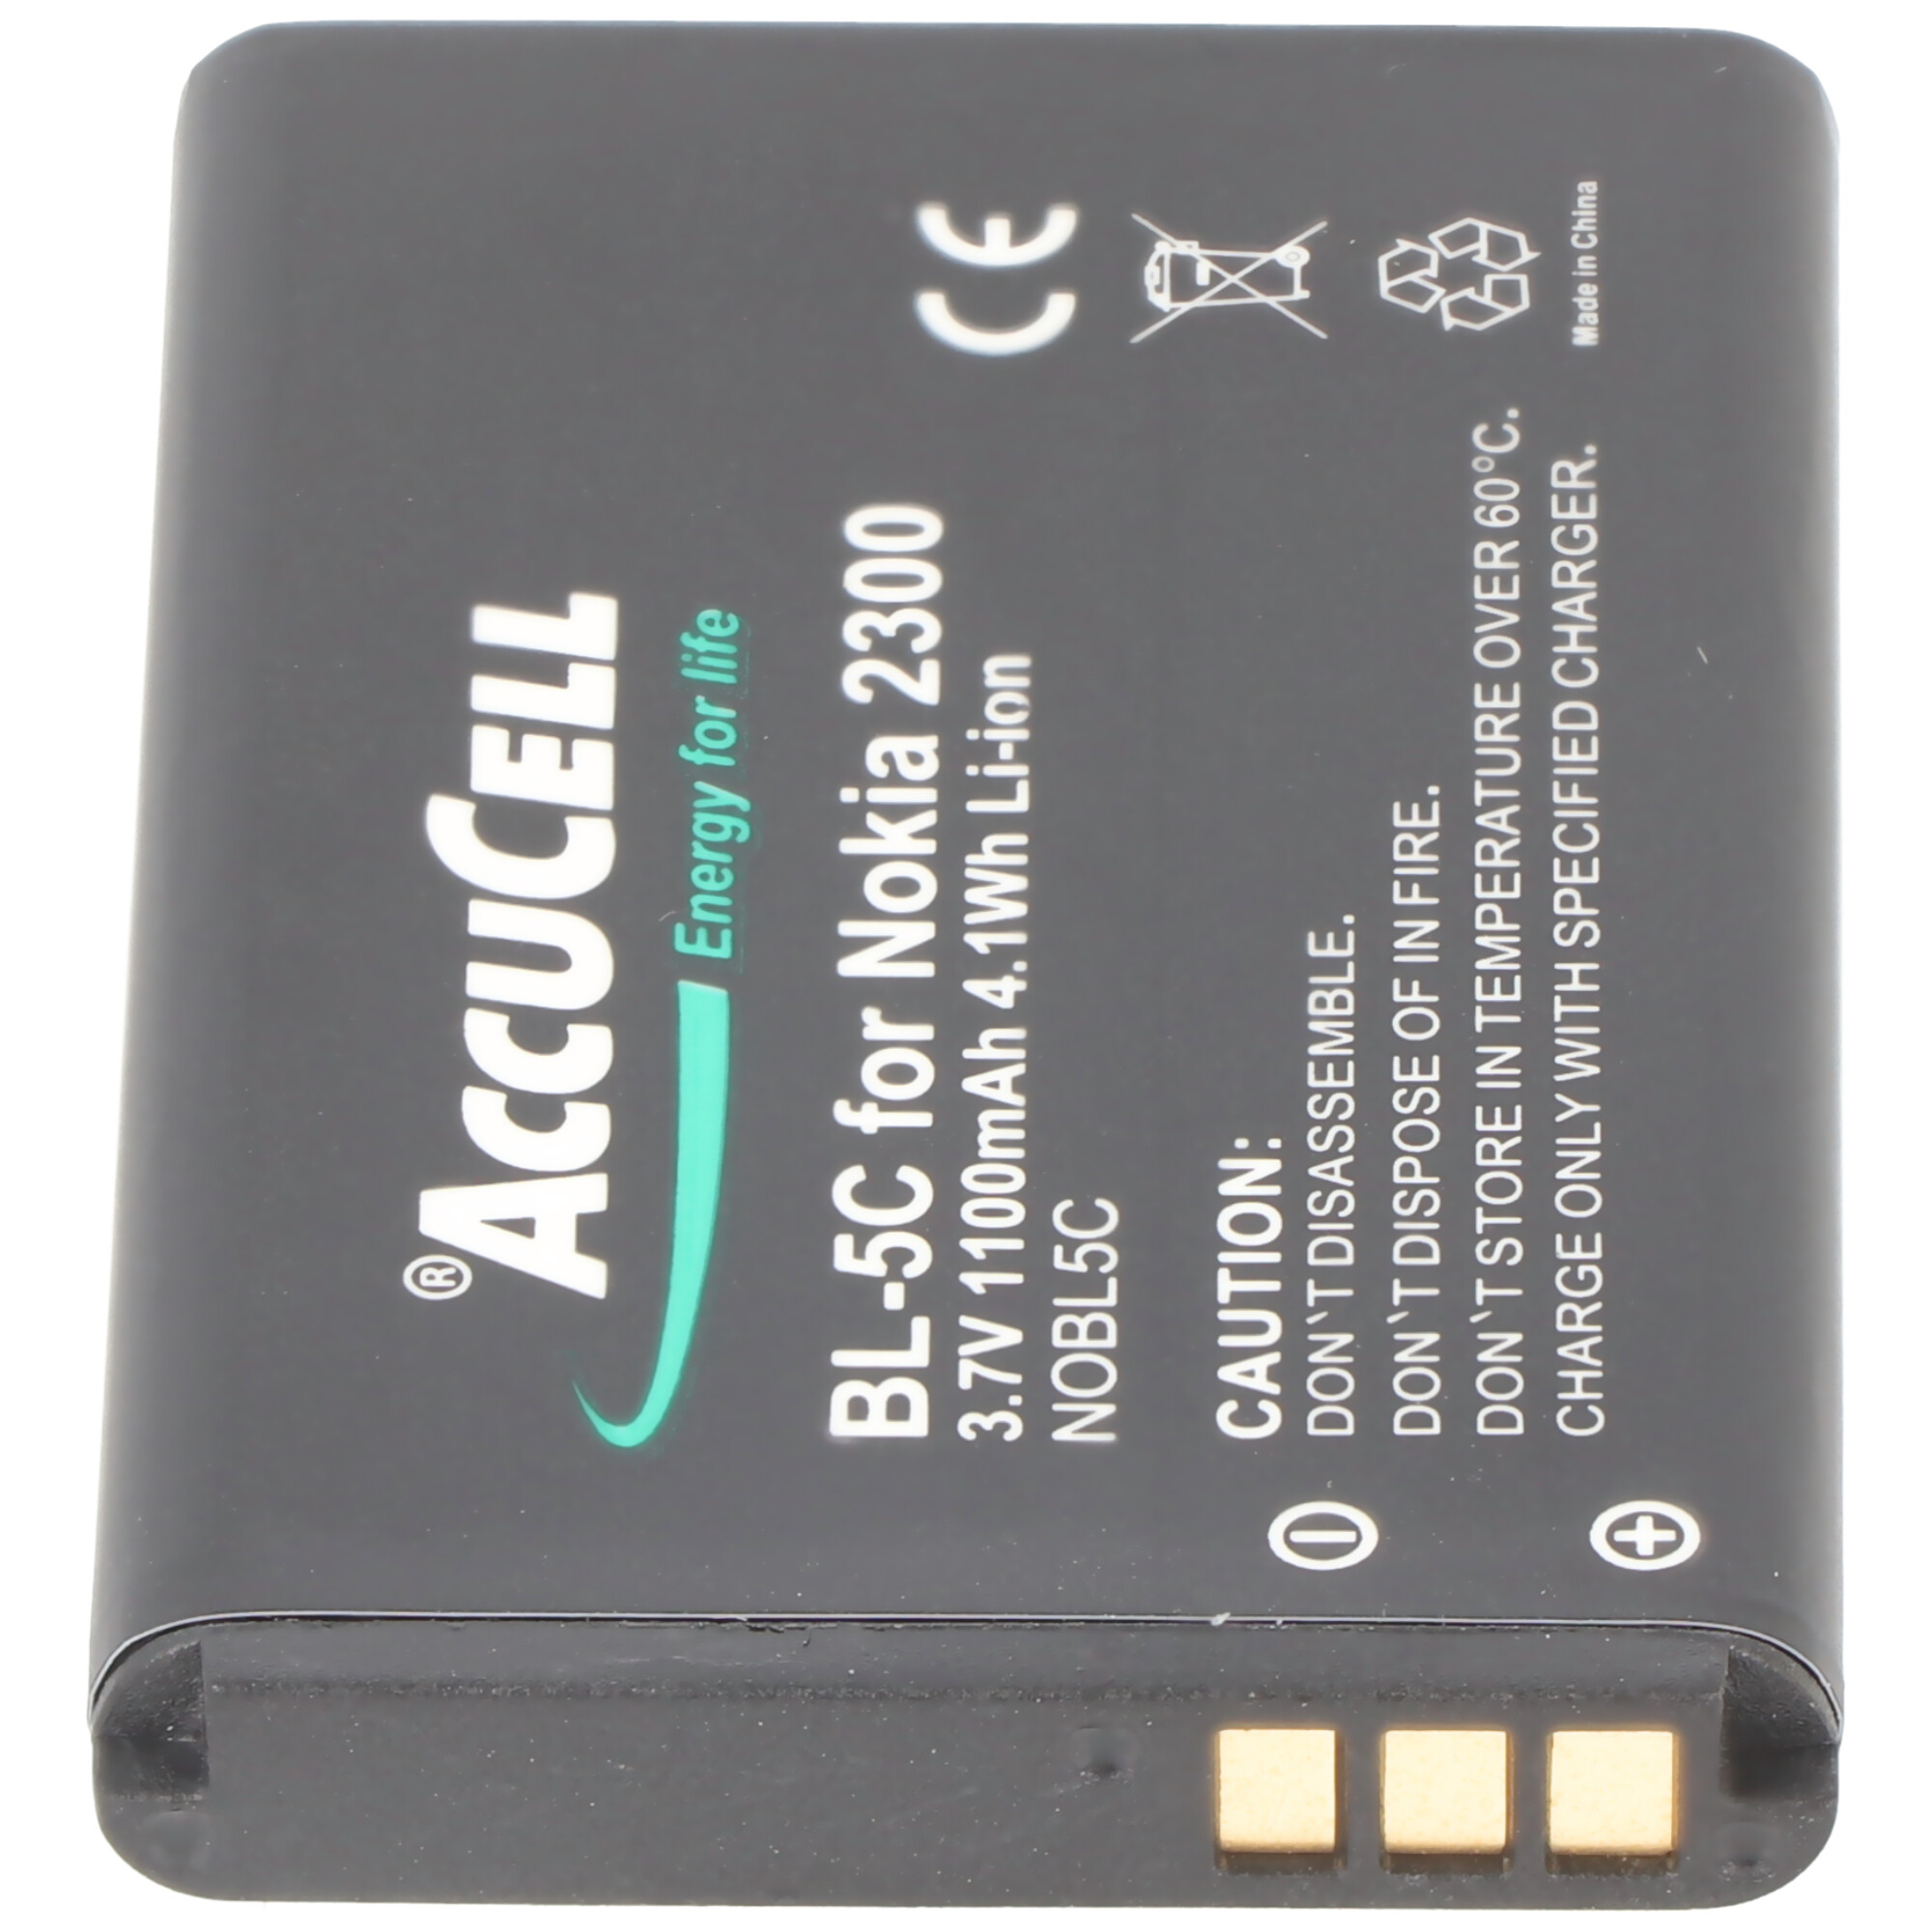 AccuCell Akku passend für Nokia 6030, BL-5C, 1100mAh